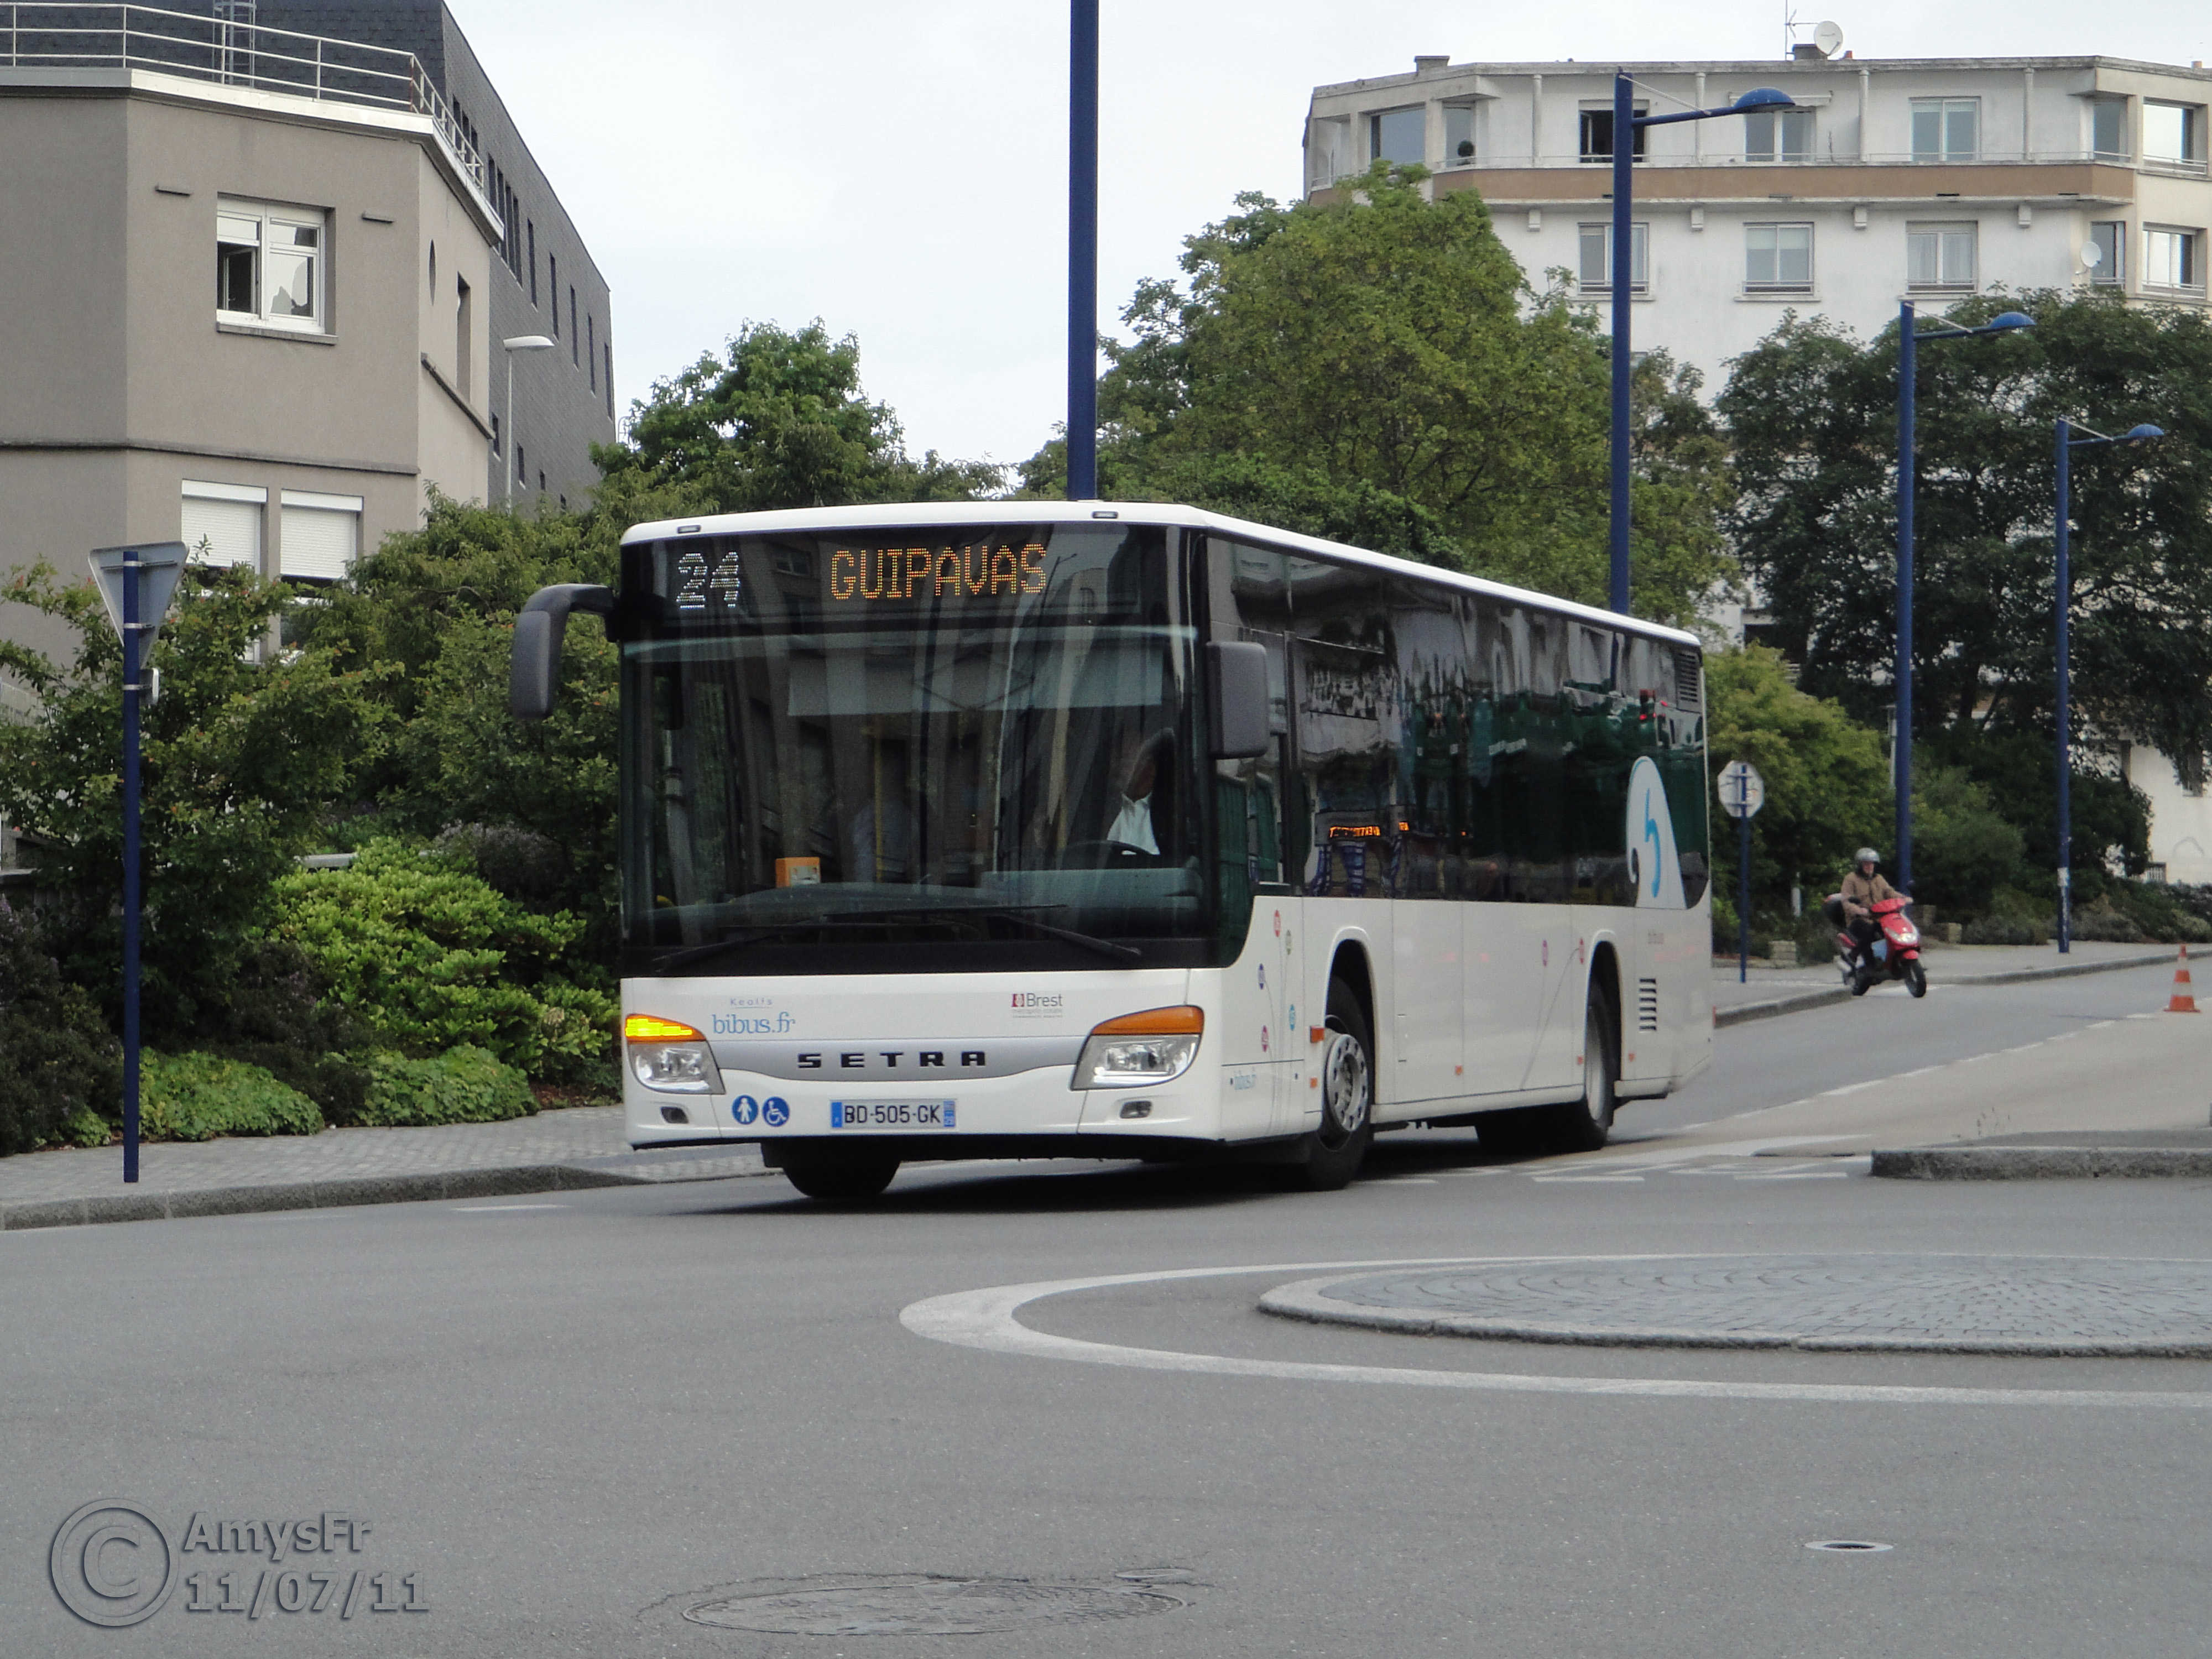 Setra S 415 NF - Bibus | Flickr - Photo Sharing!